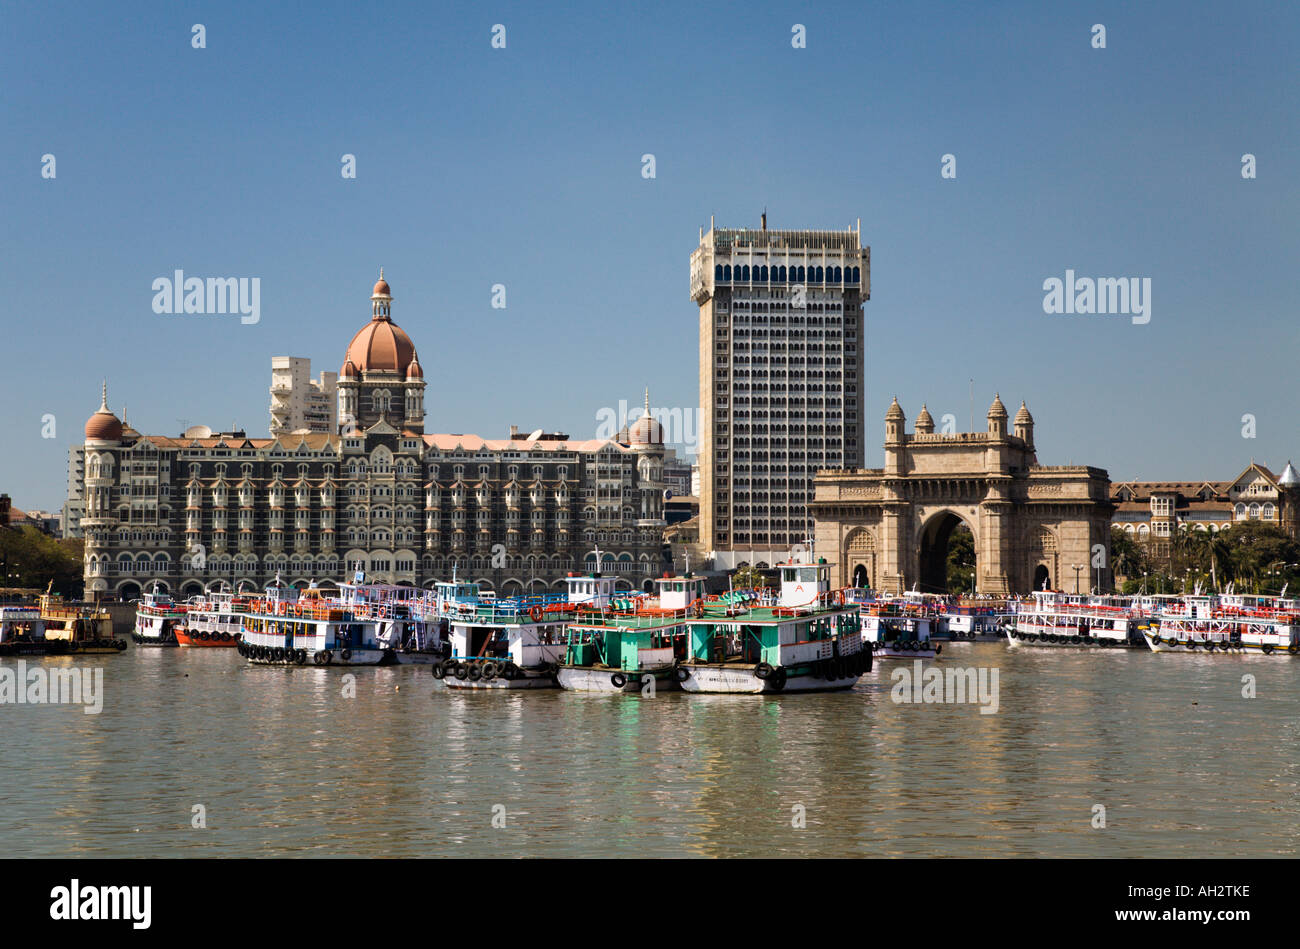 The 5 star Taj Mahal Hotel and Gateway of India seen from Mumbai harbour Stock Photo